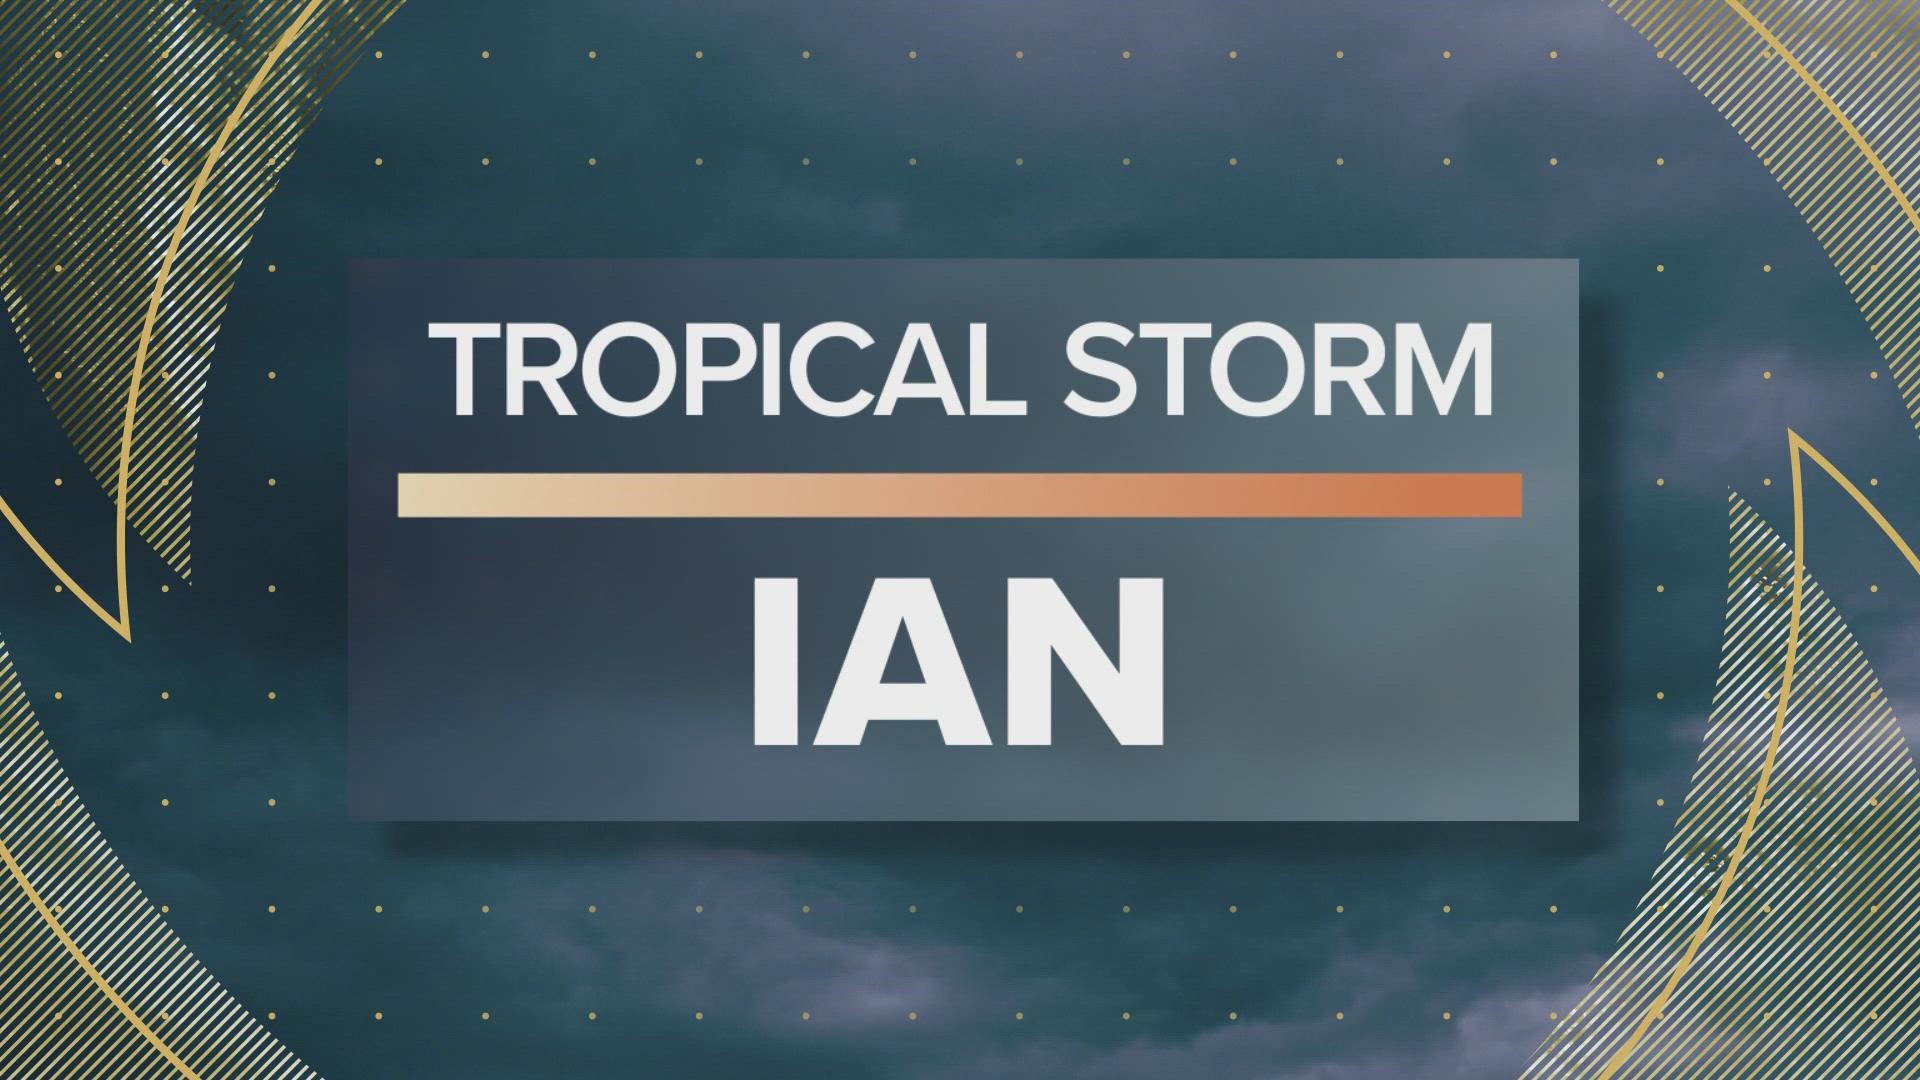 Ian prompts hurricane and tropical storm warnings for Cuba and a tropical storm watch for the Florida Keys.